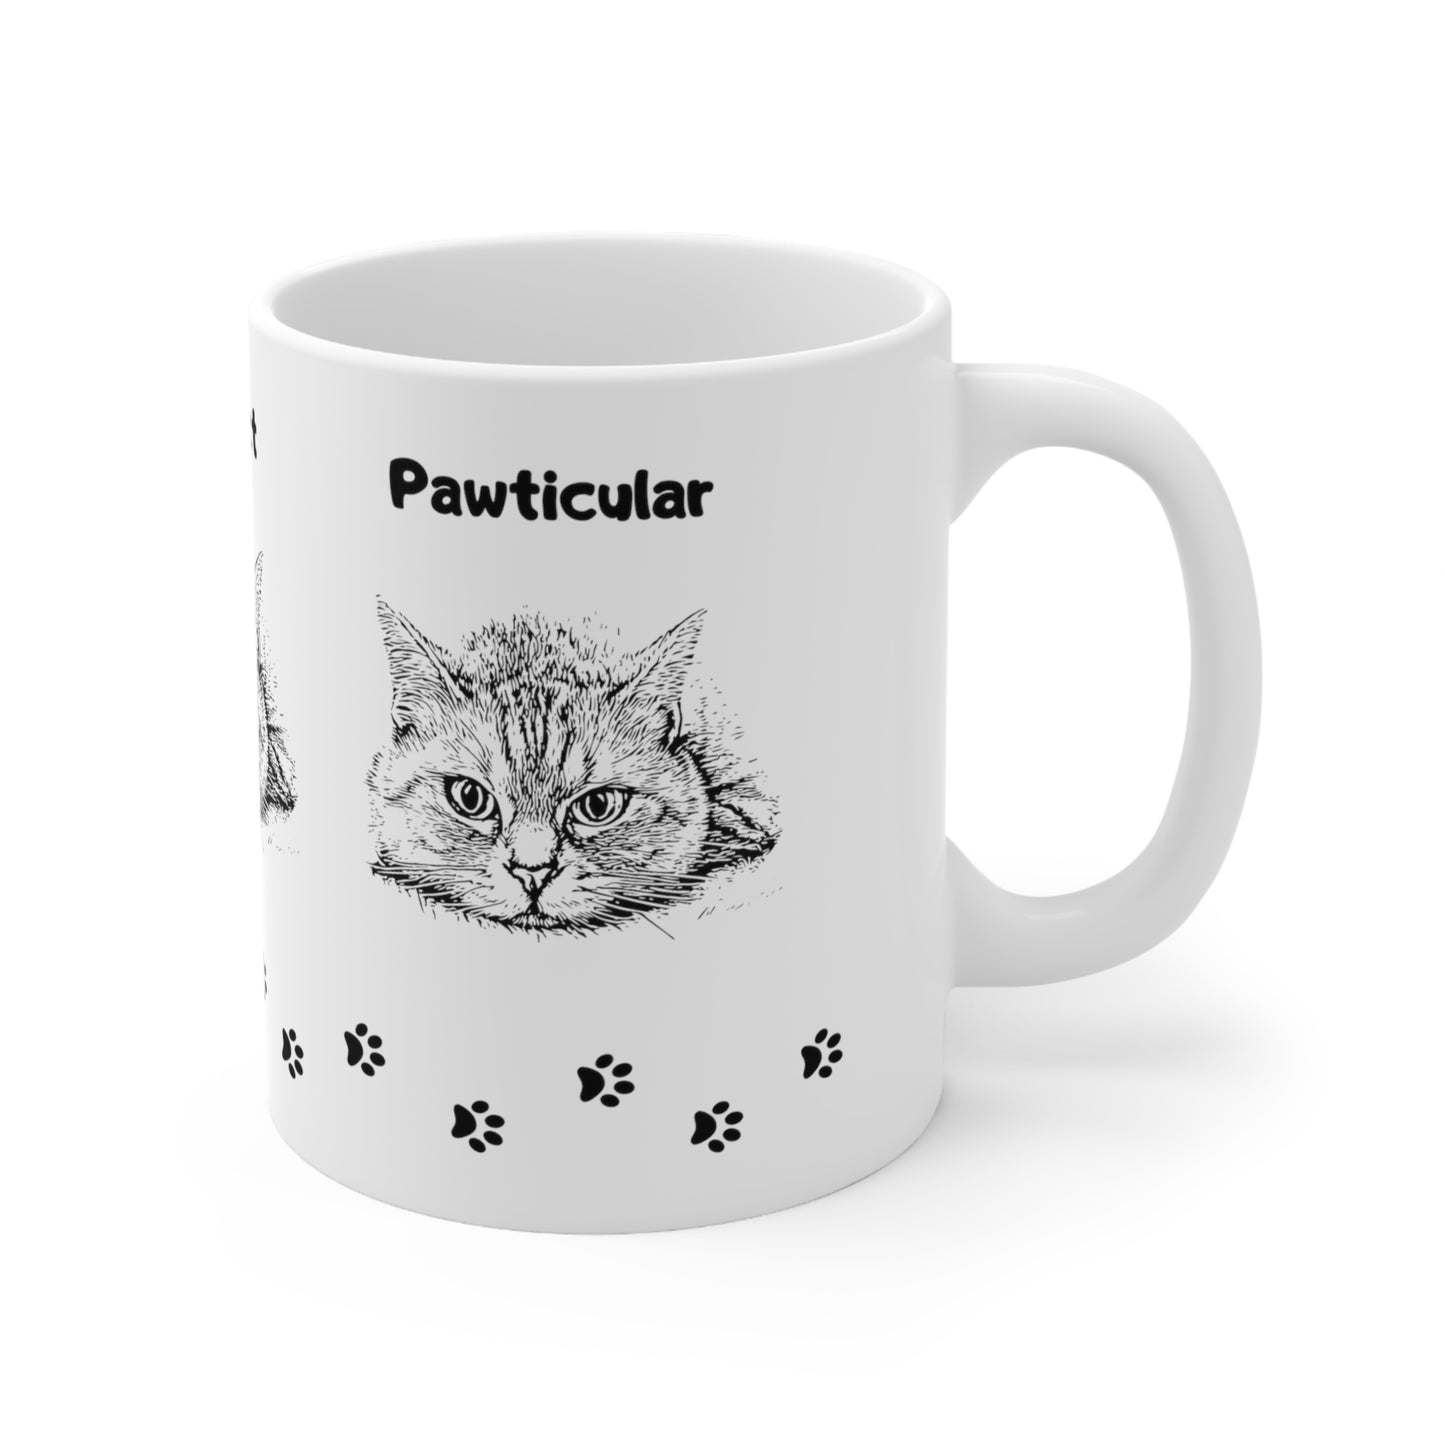 Cat Lady Coffee Mug - "Puurrfect-Pawsitive-Pawticular"  Motif - Ceramic - 11oz